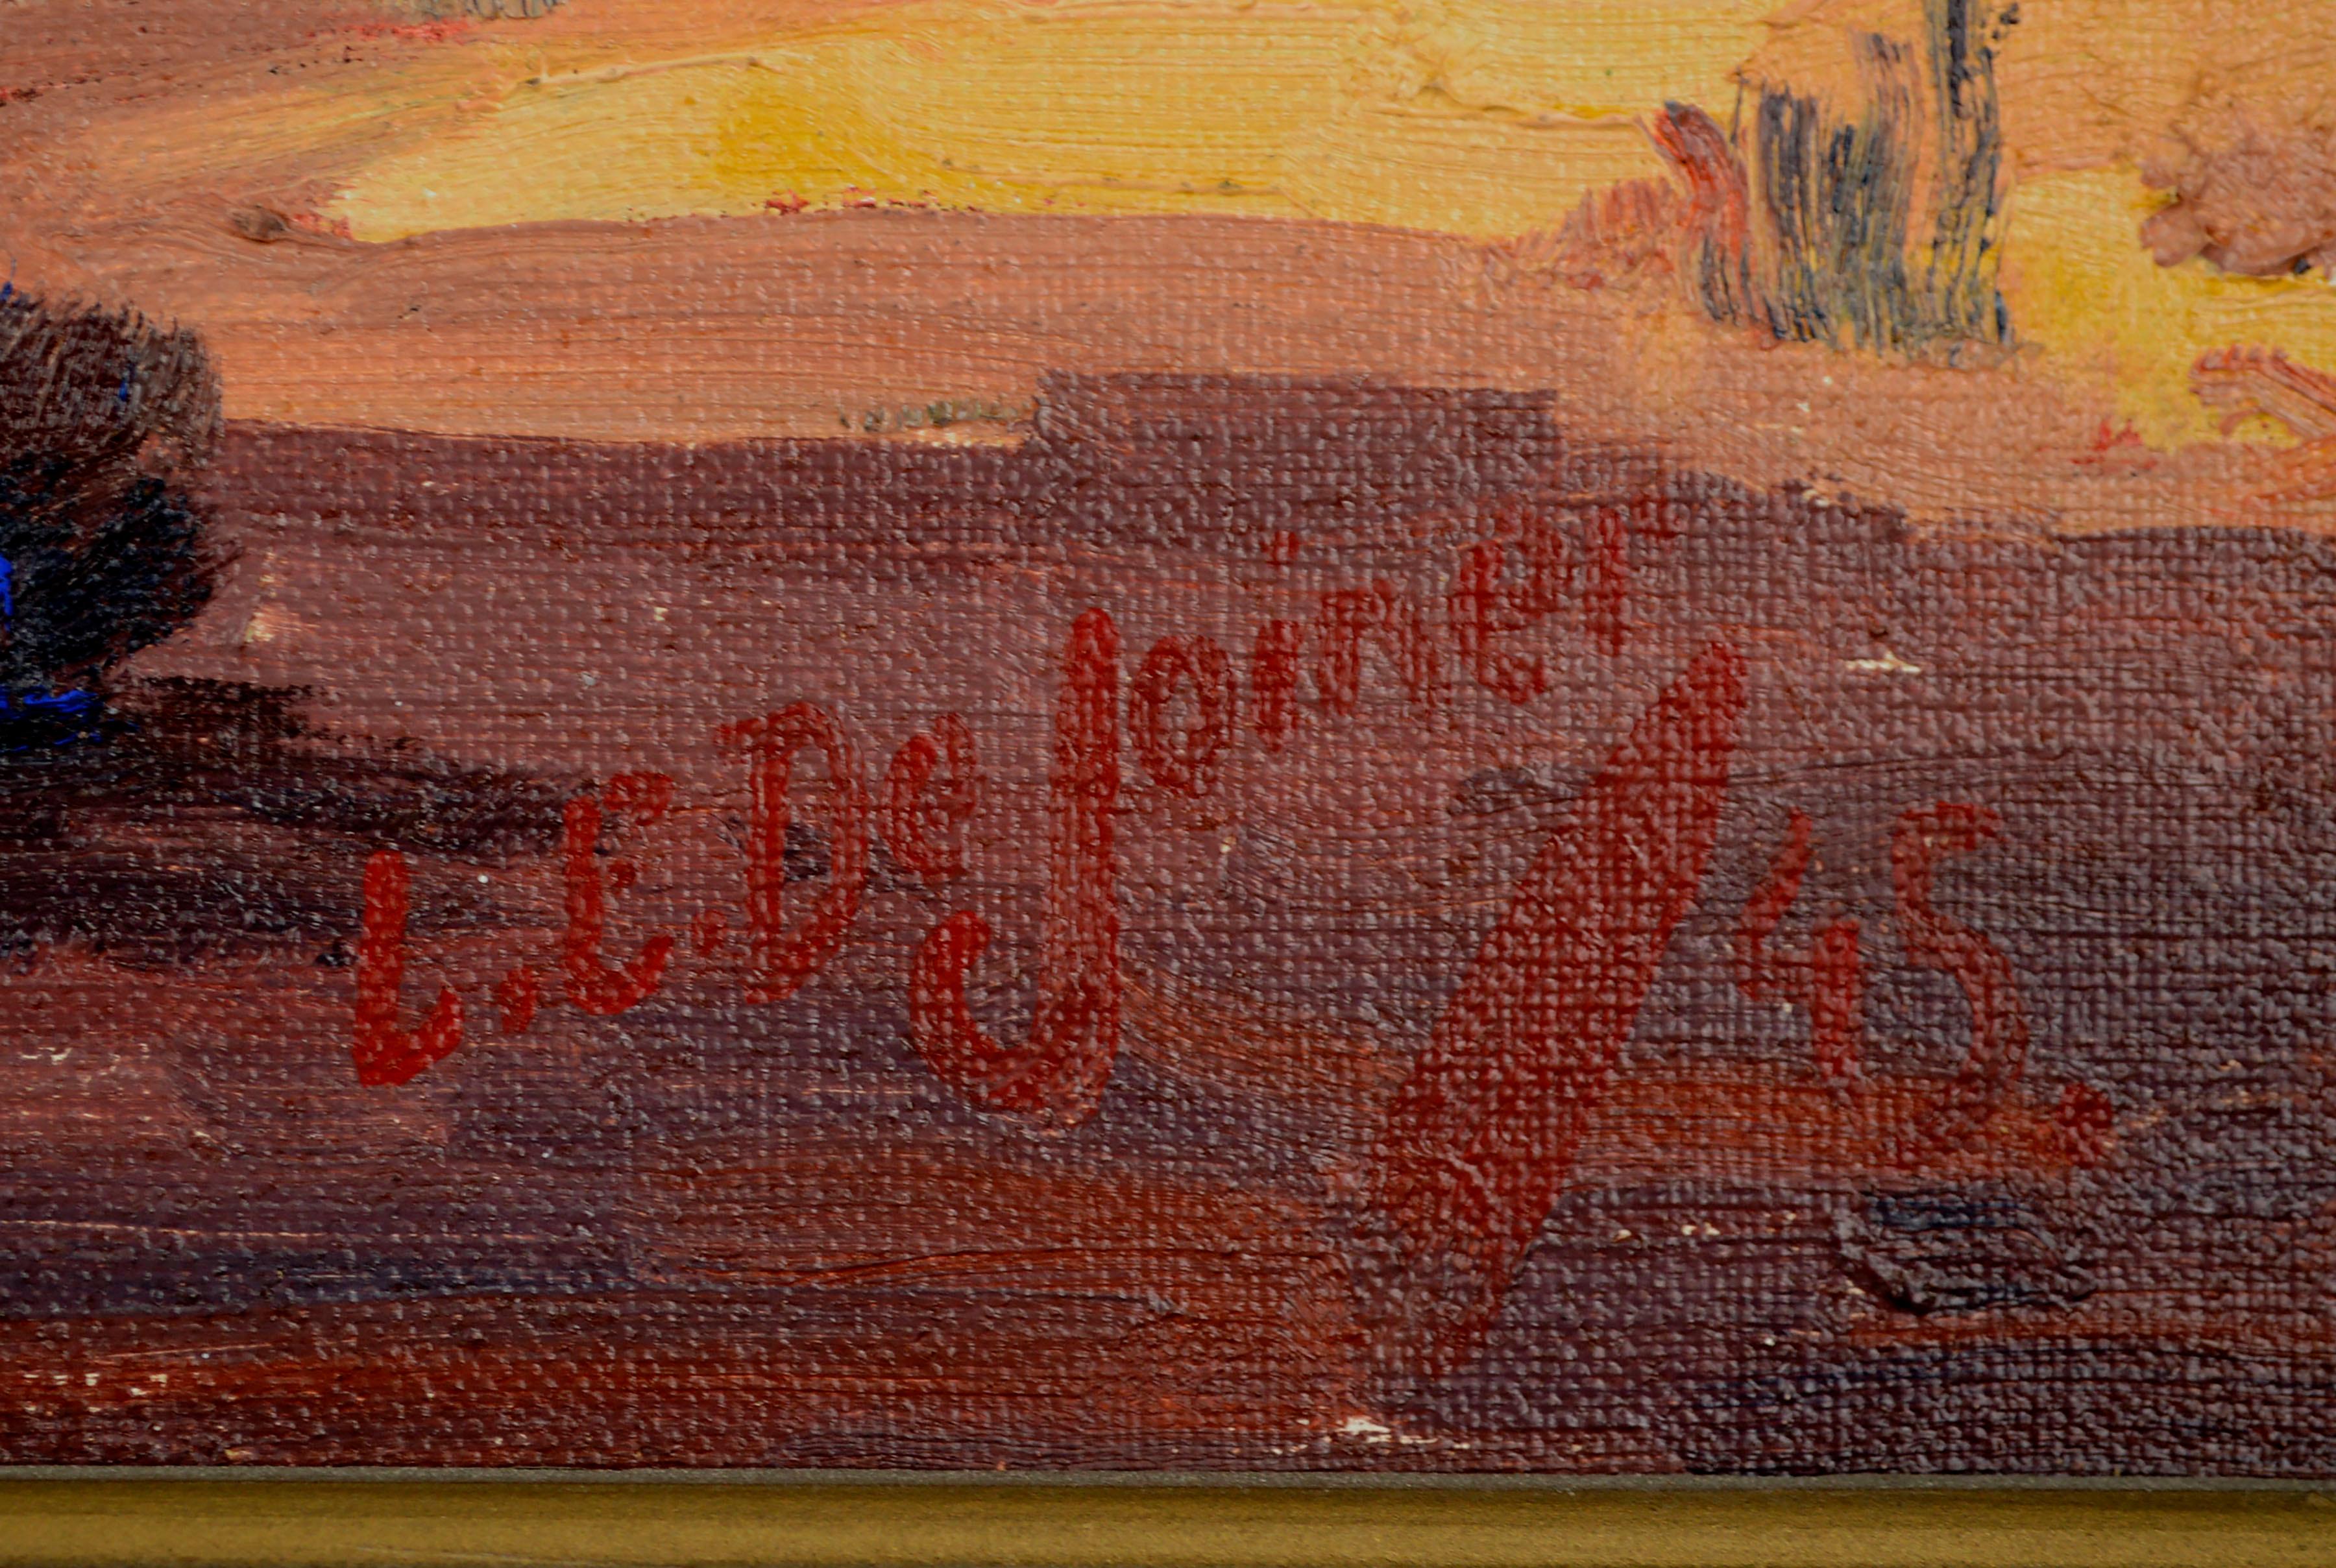 Picacho Peak, Arizona 1945 - Mid Century Southwest Desert Landscape by Dejoiner

Beautiful mid-1940's impressionist southwest desert landscape by California artist Luther Evans Dejoiner (American, 1886-1954), 1945. Dejoiner depicts this expansive